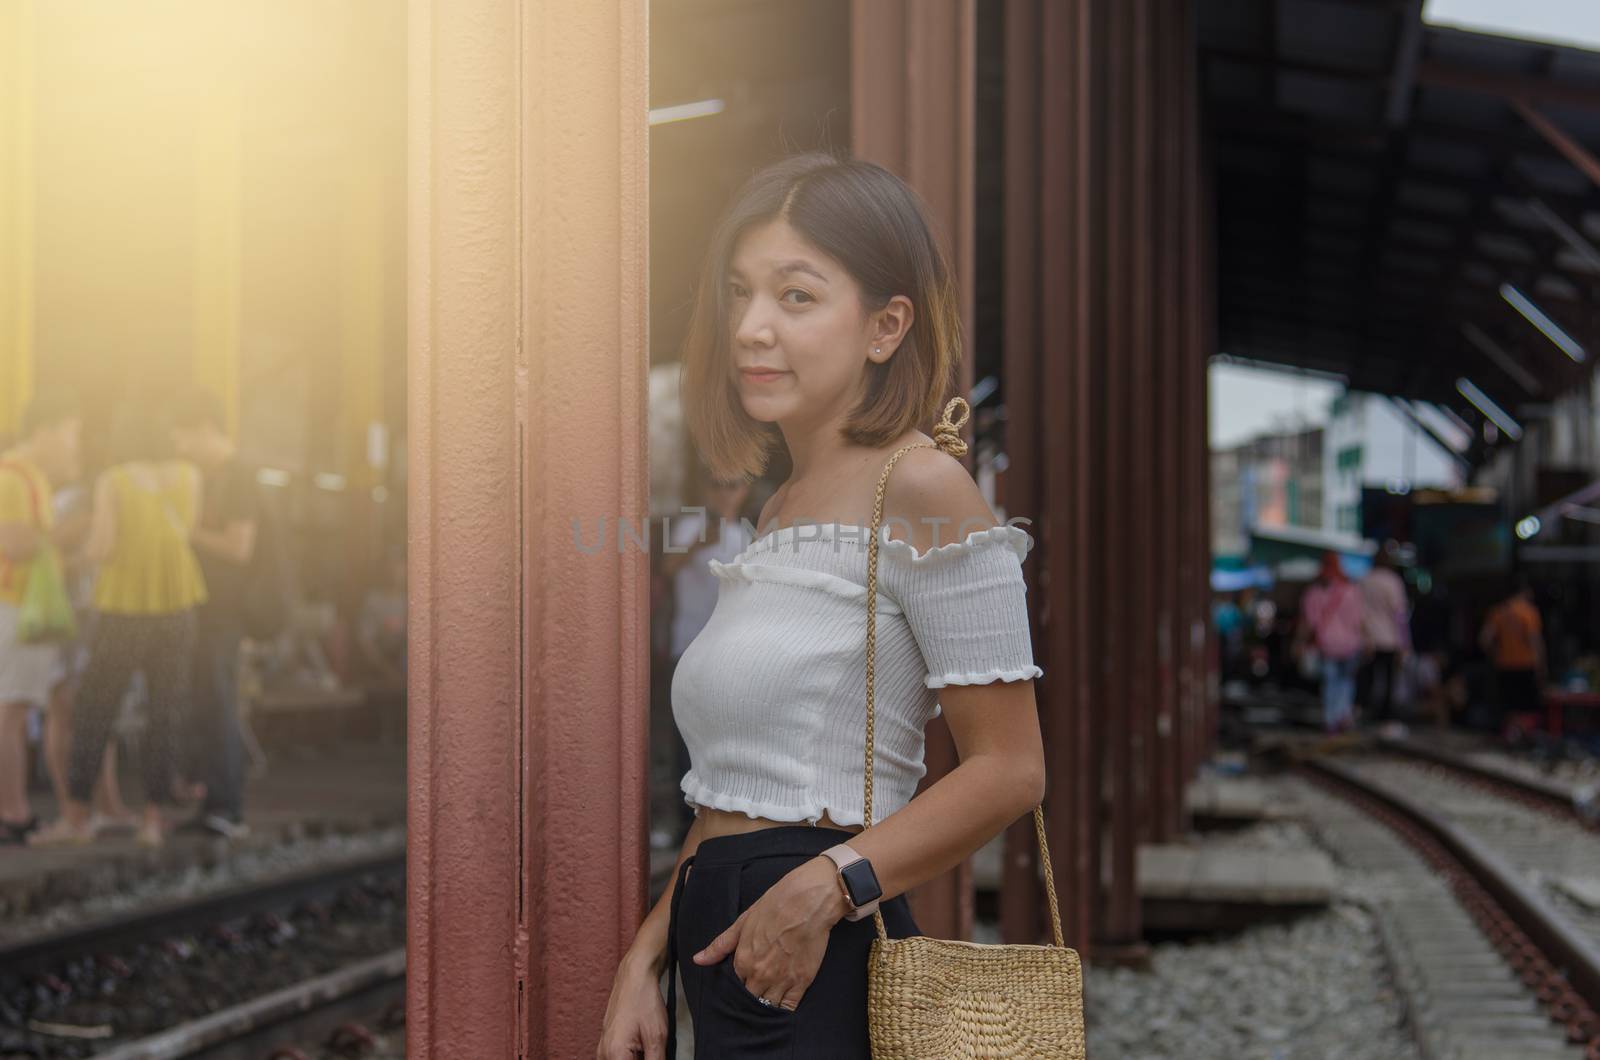 lifestyle fashion portrait woman asian at the train.